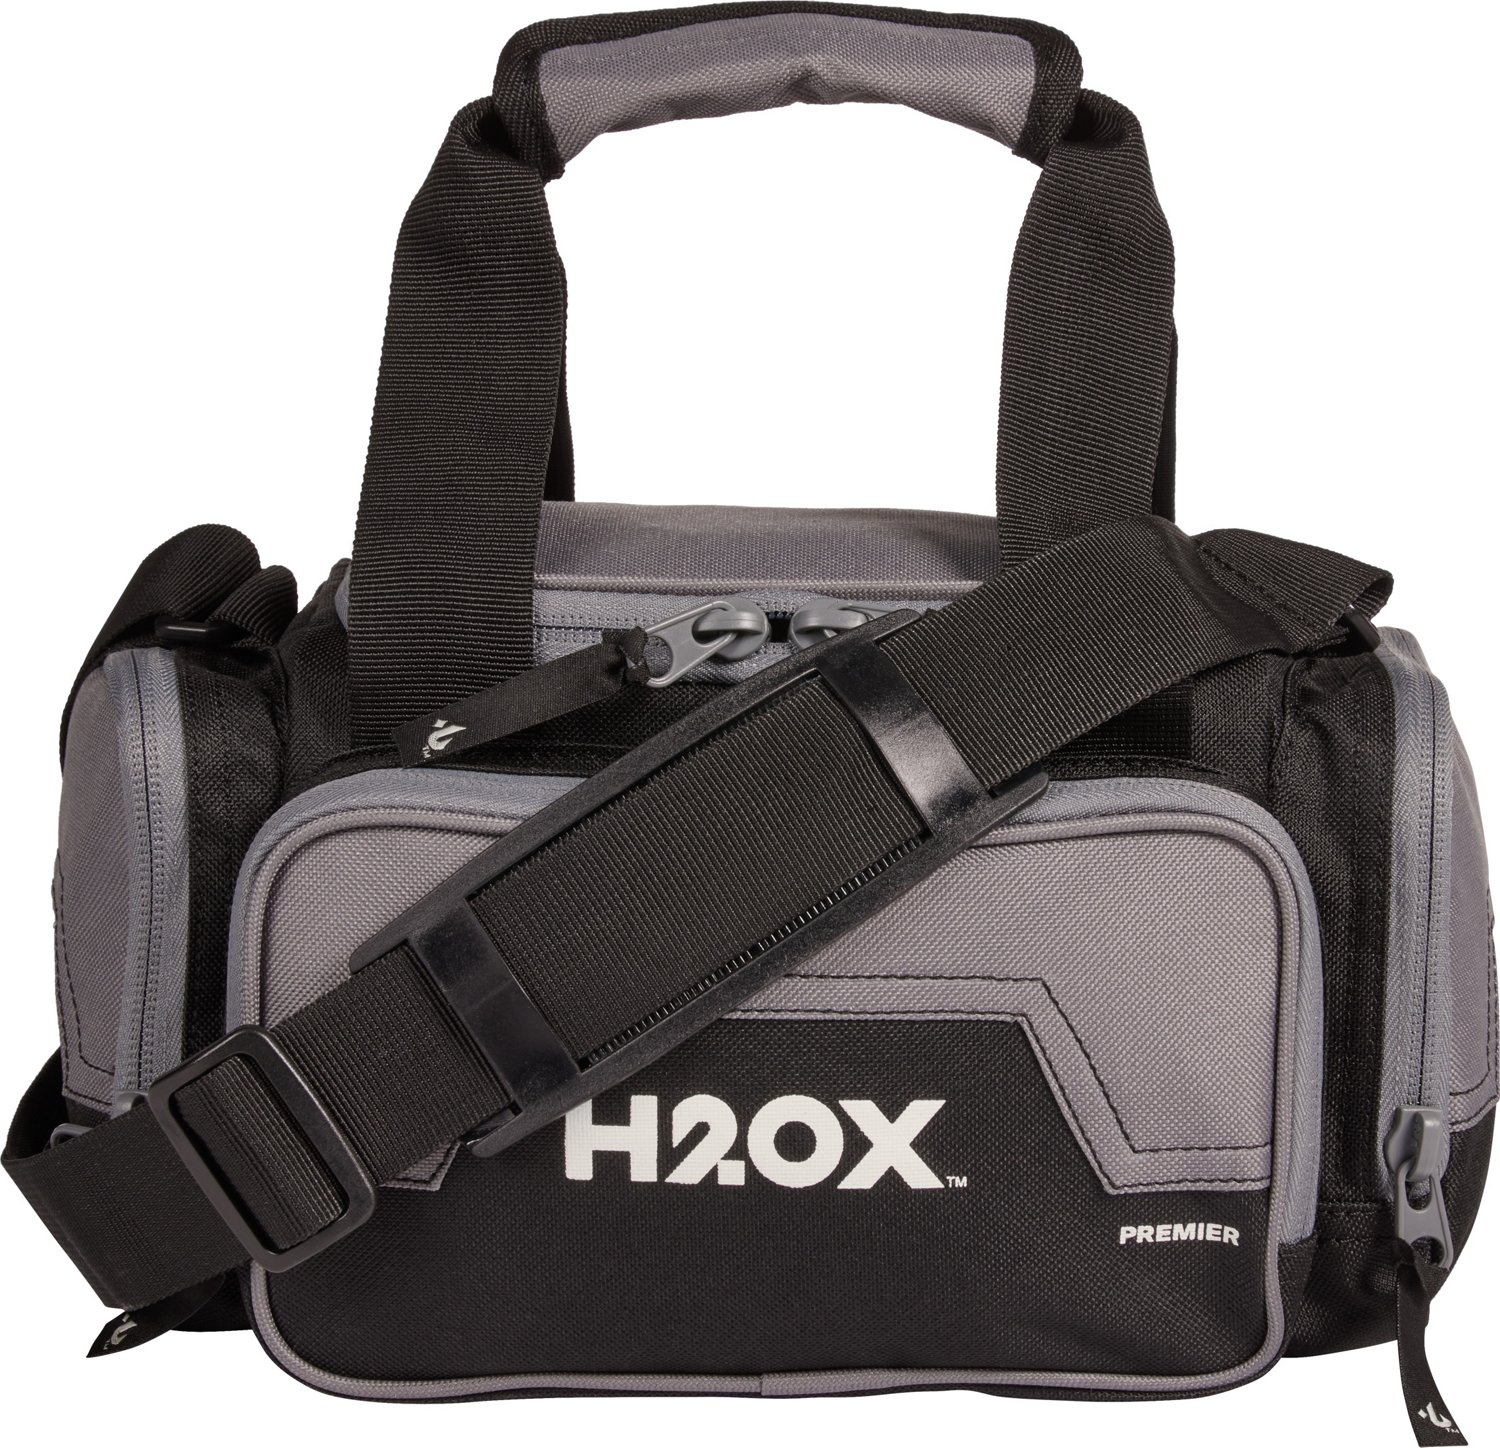 DSLEAF Waterproof Tackle Box Bag with Rod Holder, Soft Fishing